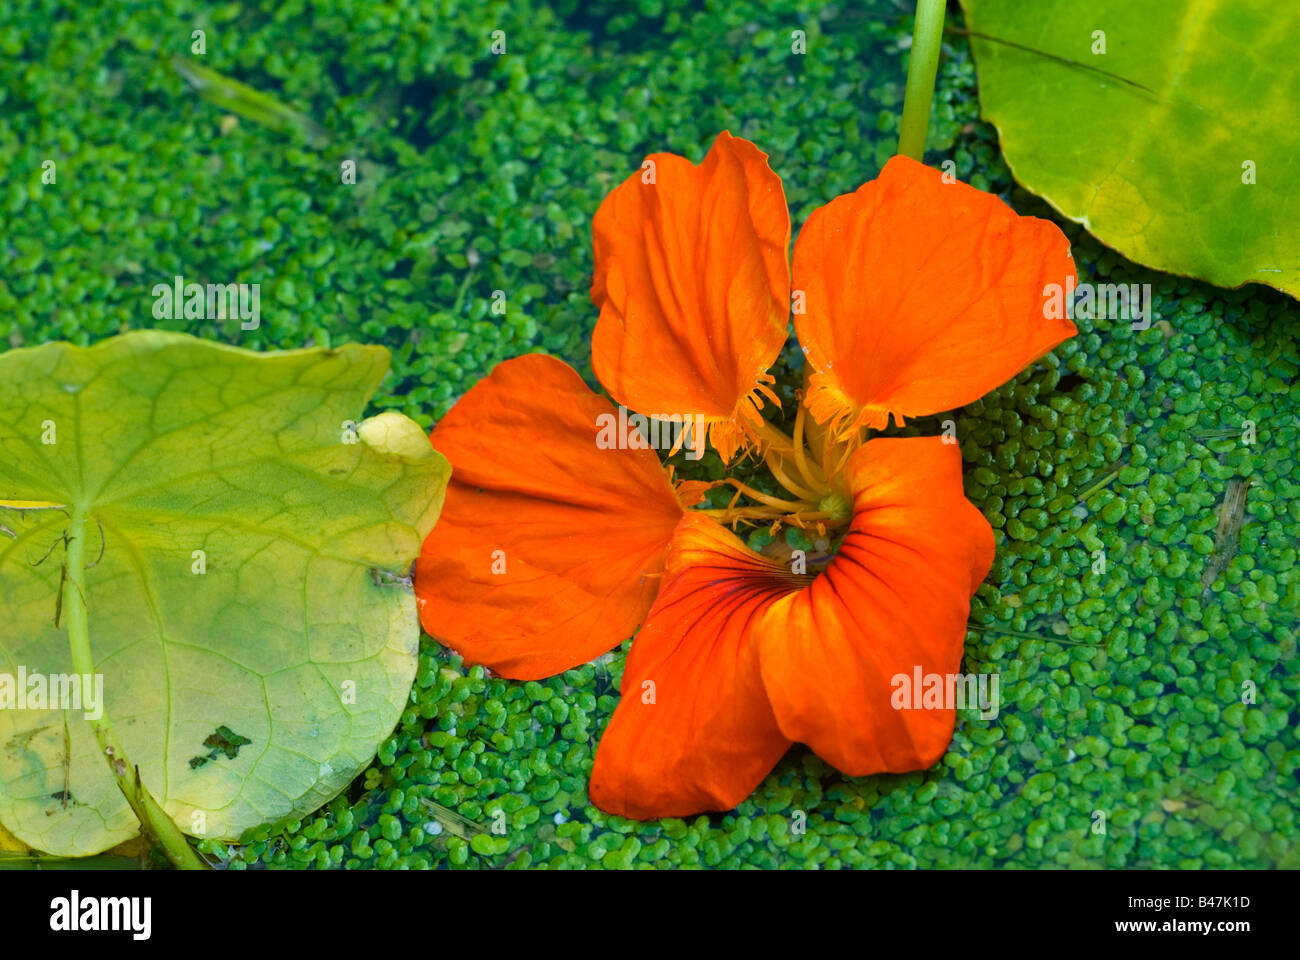 nasturtium flower in a pond of duck weed Stock Photo